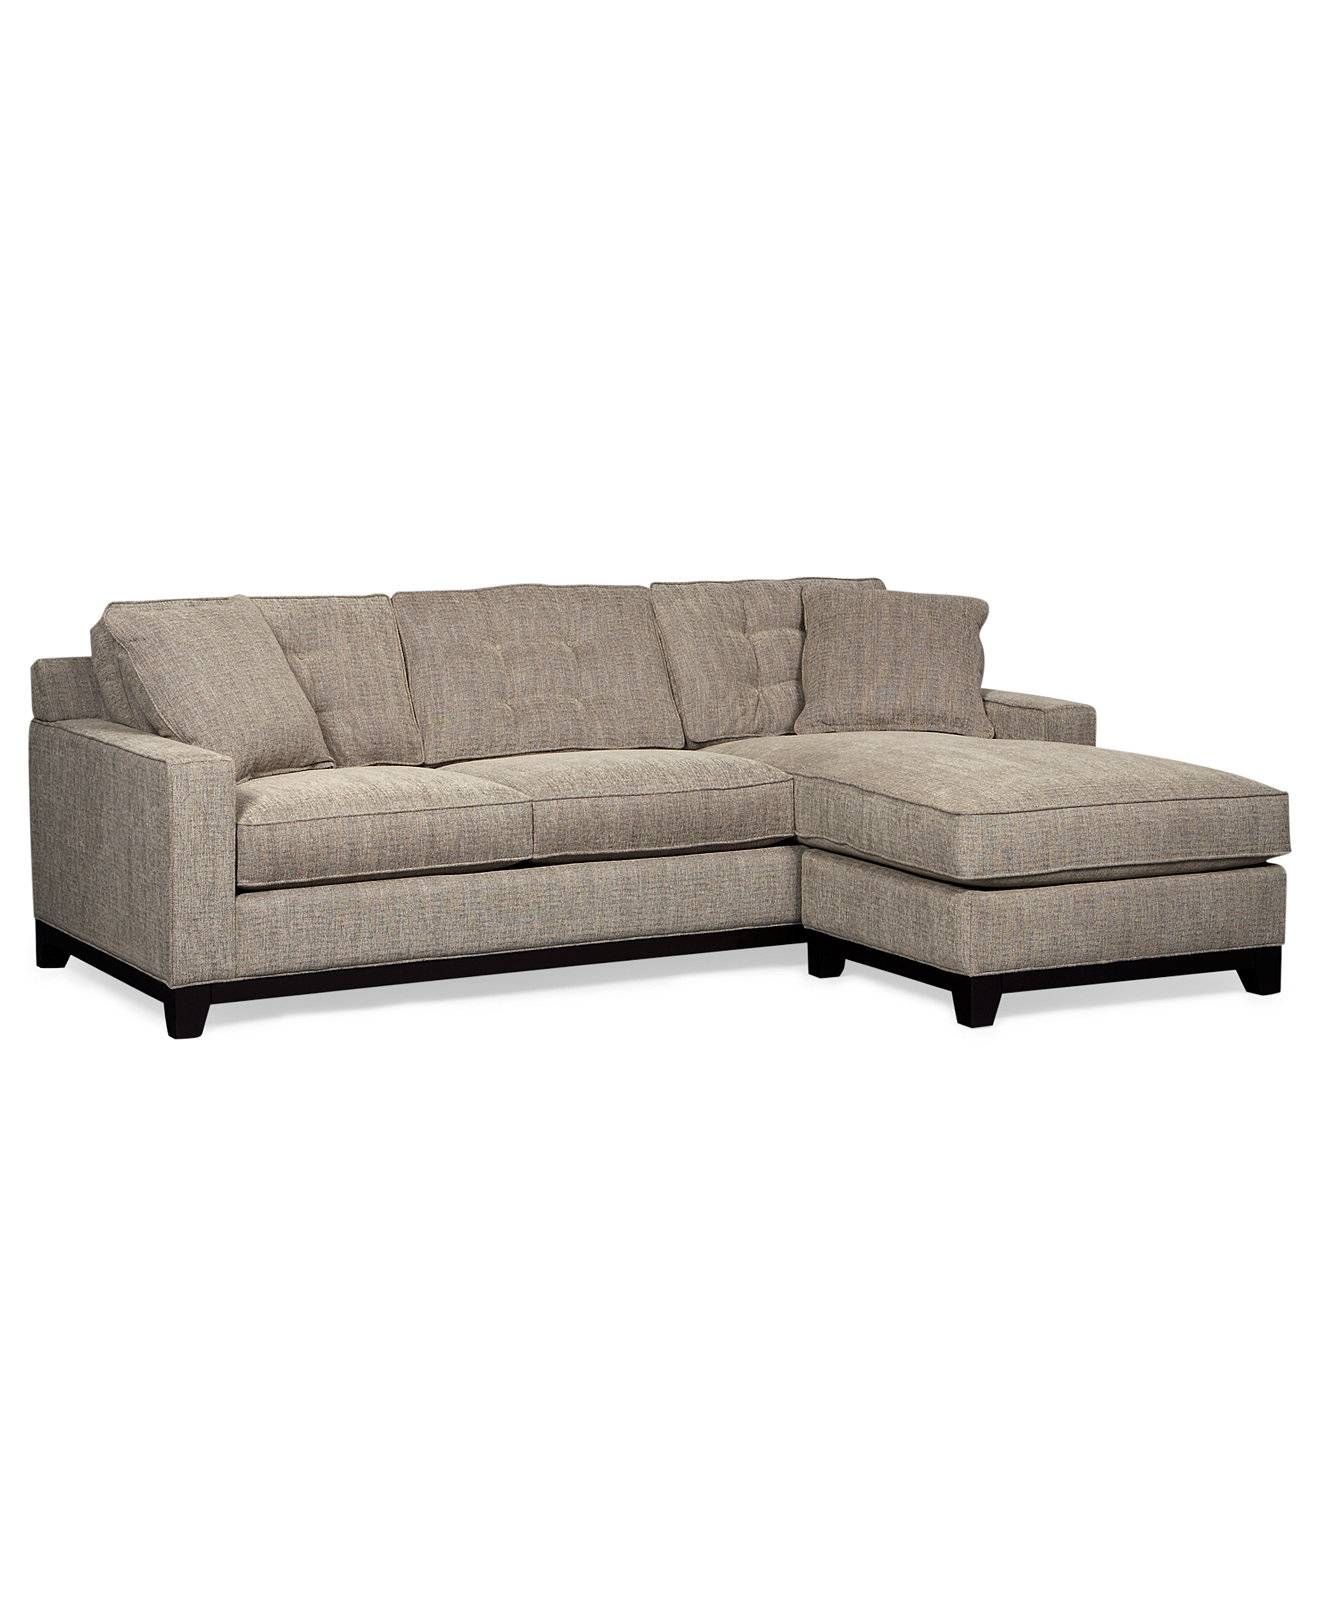 Sofas: Best Family Room Furniture Design With Elegant Macys Sofa Within Macys Sofas (View 16 of 25)